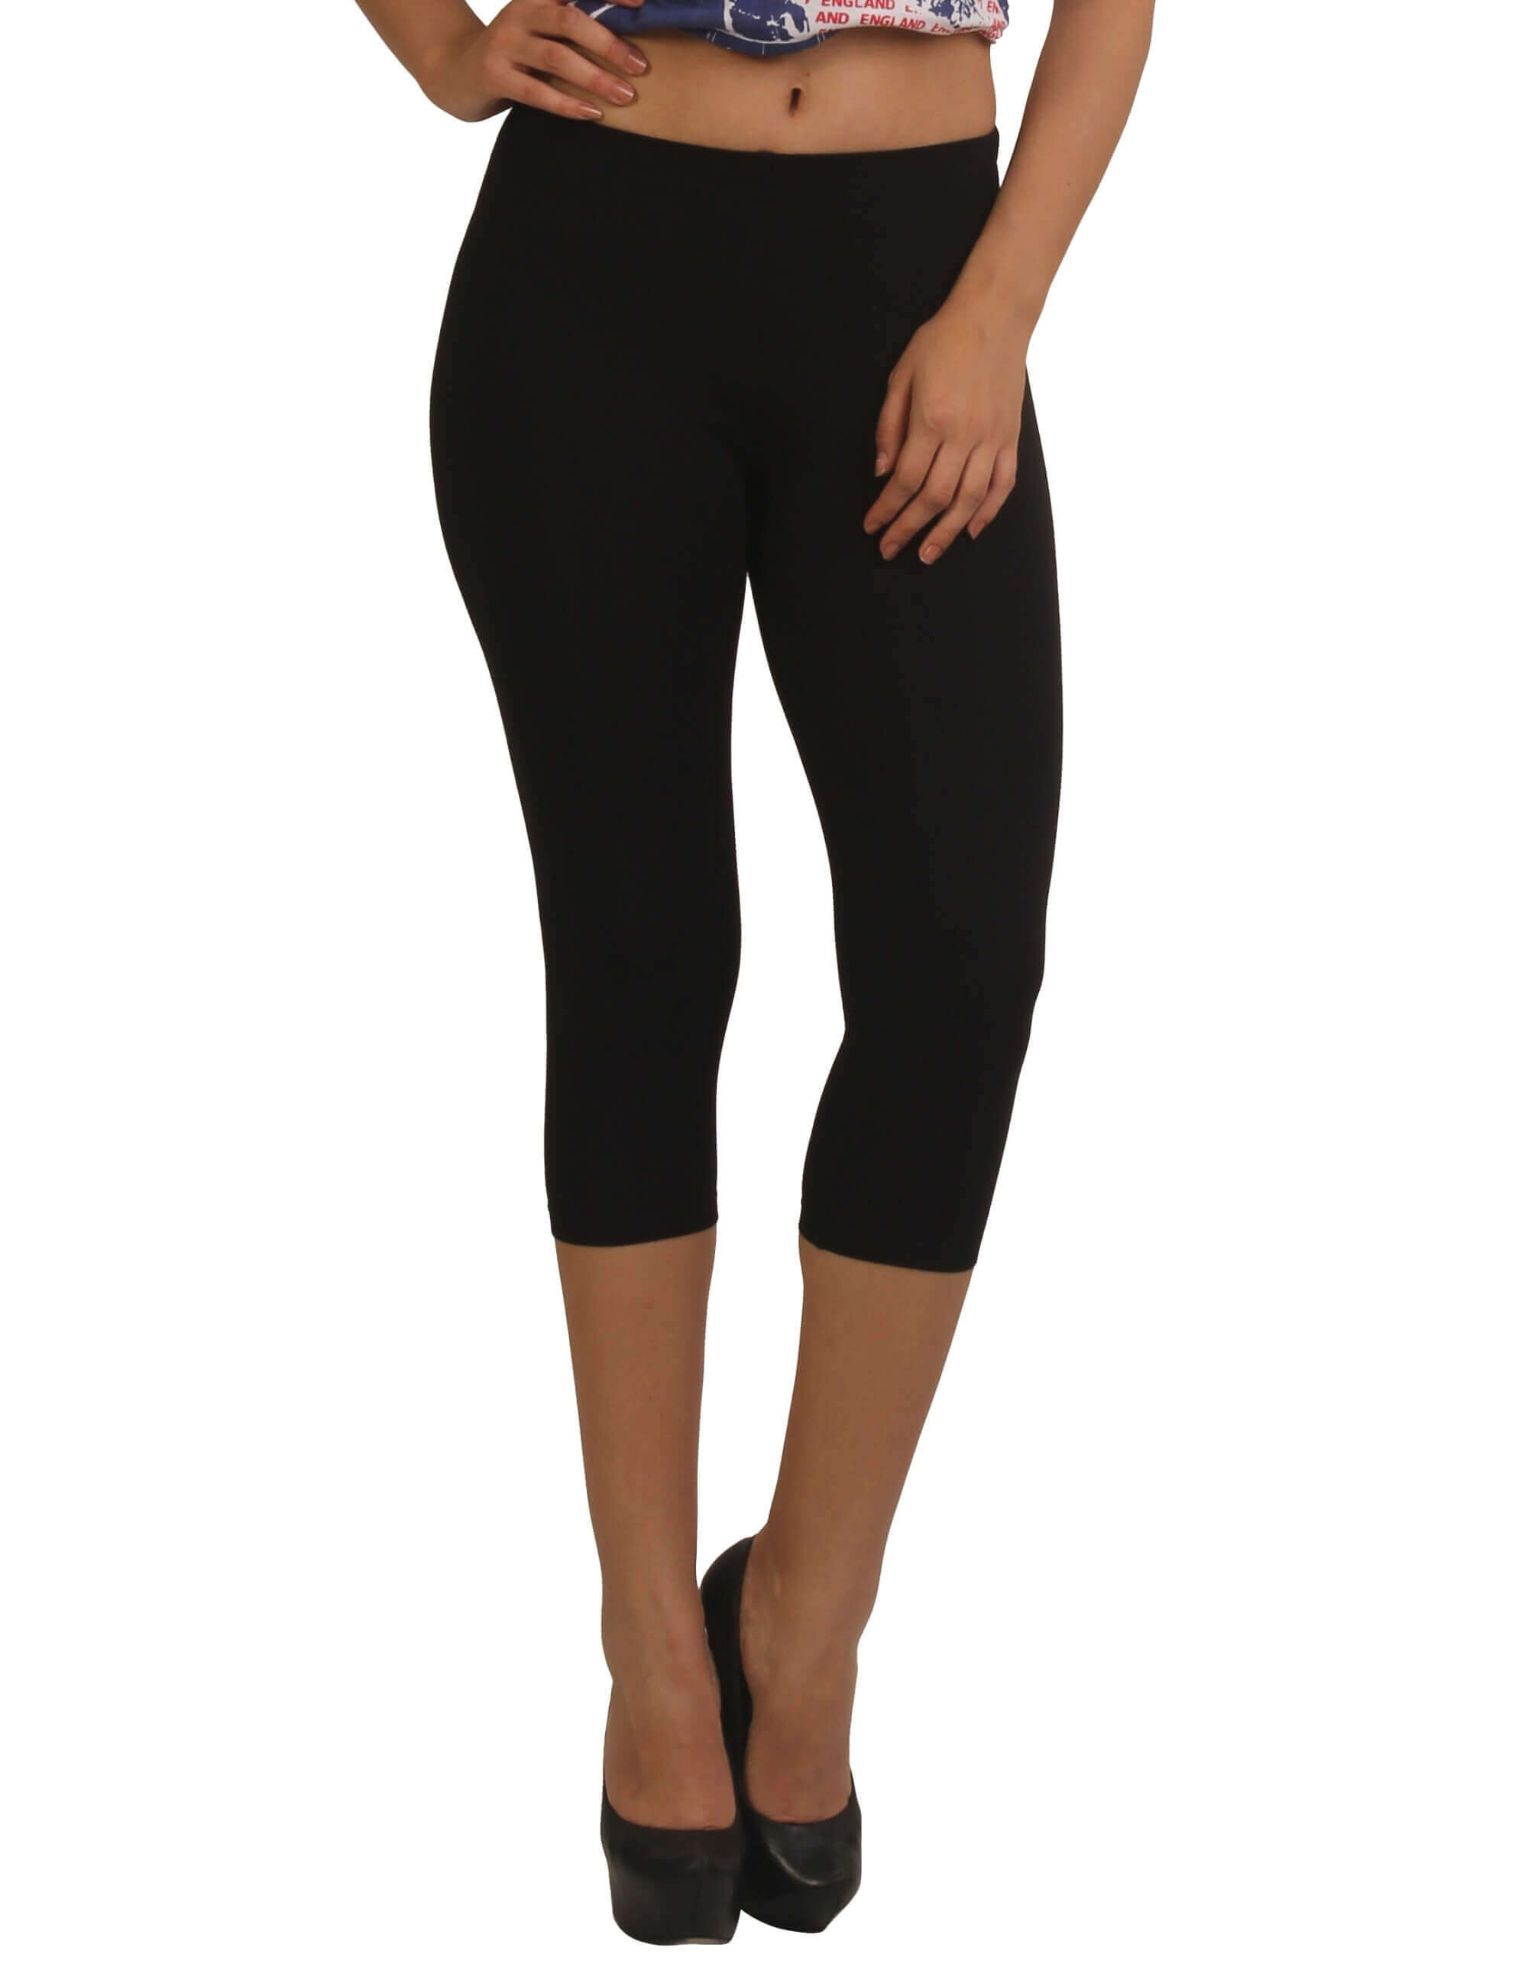 aakrushi Capri leggings Lace Women Black, Black Capri - Buy aakrushi Capri  leggings Lace Women Black, Black Capri Online at Best Prices in India |  Flipkart.com